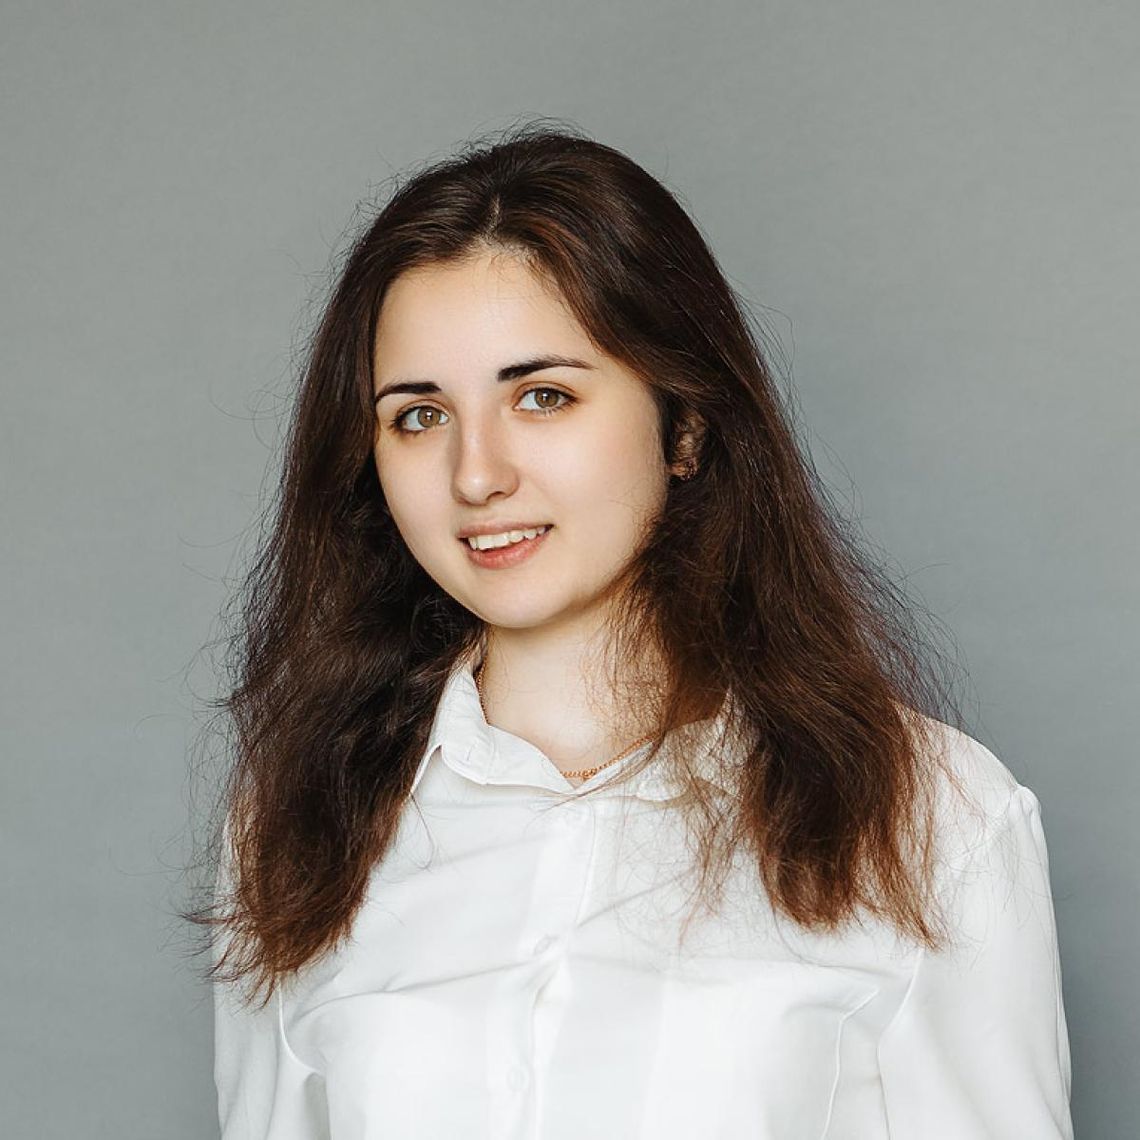 UniPage specialist Ulyana Ivanushkina